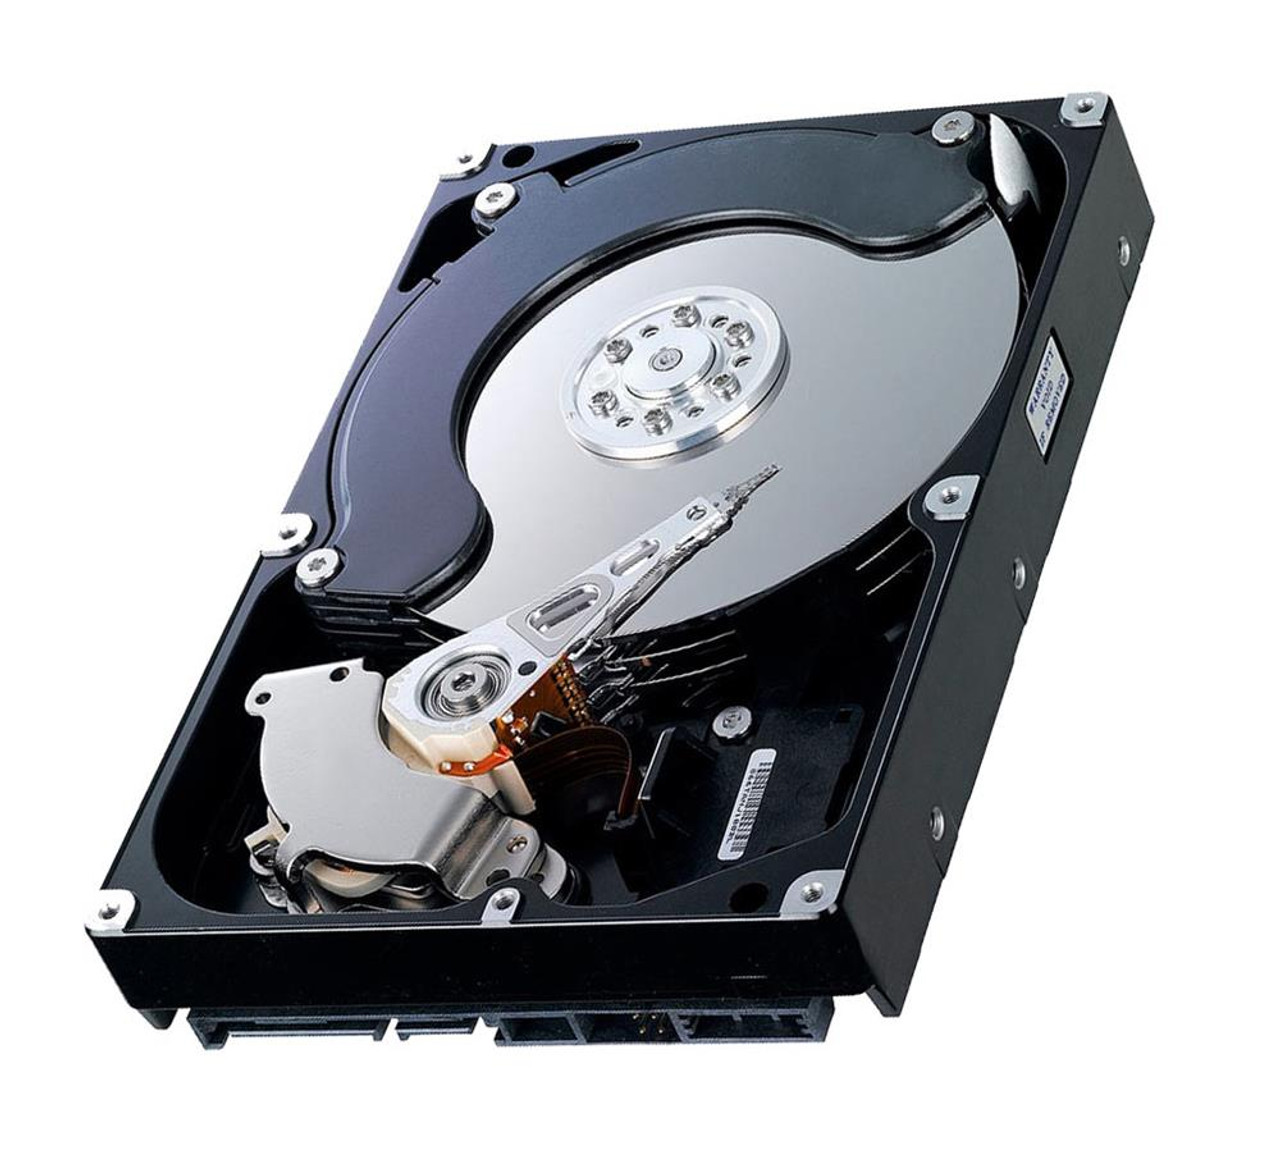 WD300BB-75DEA0 - Western Digital Caviar 30GB 7200RPM ATA-100 2MB Cache 3.5-inch Hard Disk Drive